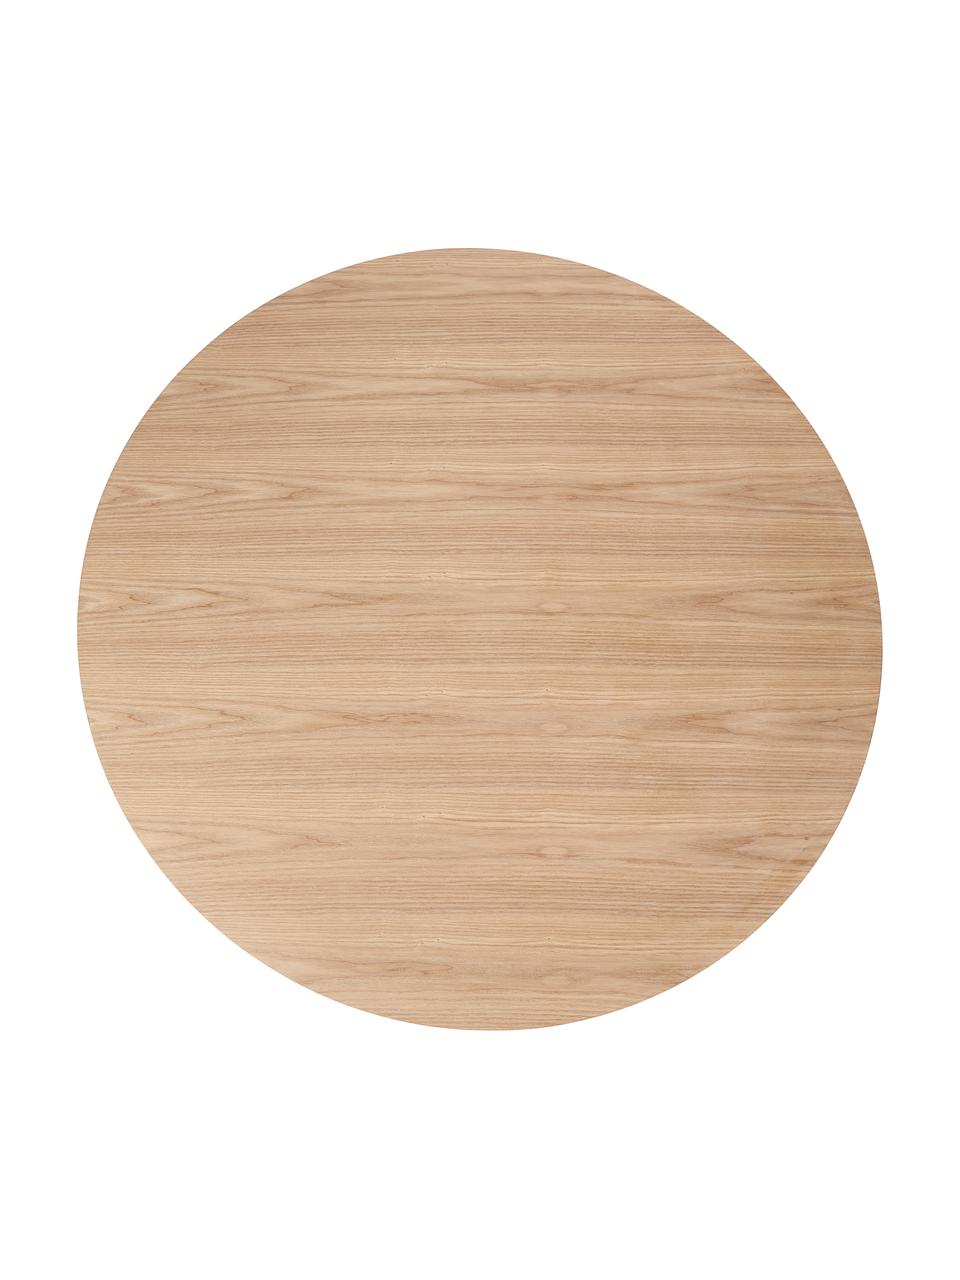 Table ronde Menorca, Ø 100 cm, Brun clair, blanc, Ø 100 x haut. 75 cm